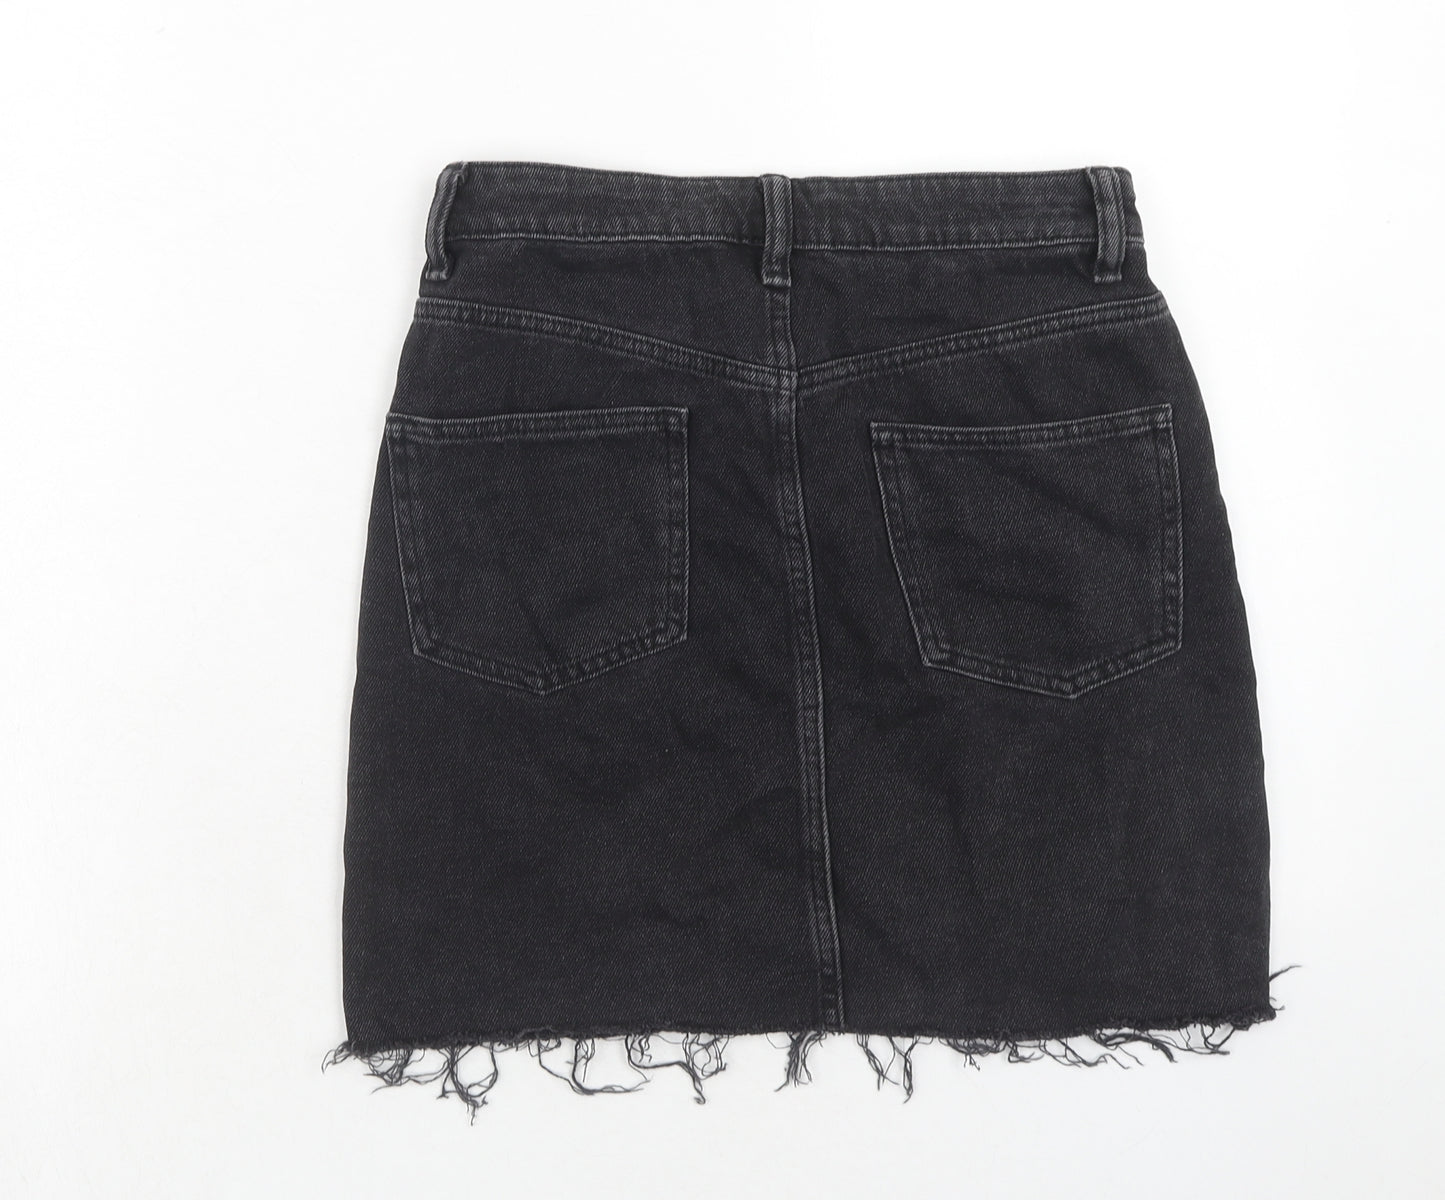 AsYou Womens Black Cotton A-Line Skirt Size 8 Zip